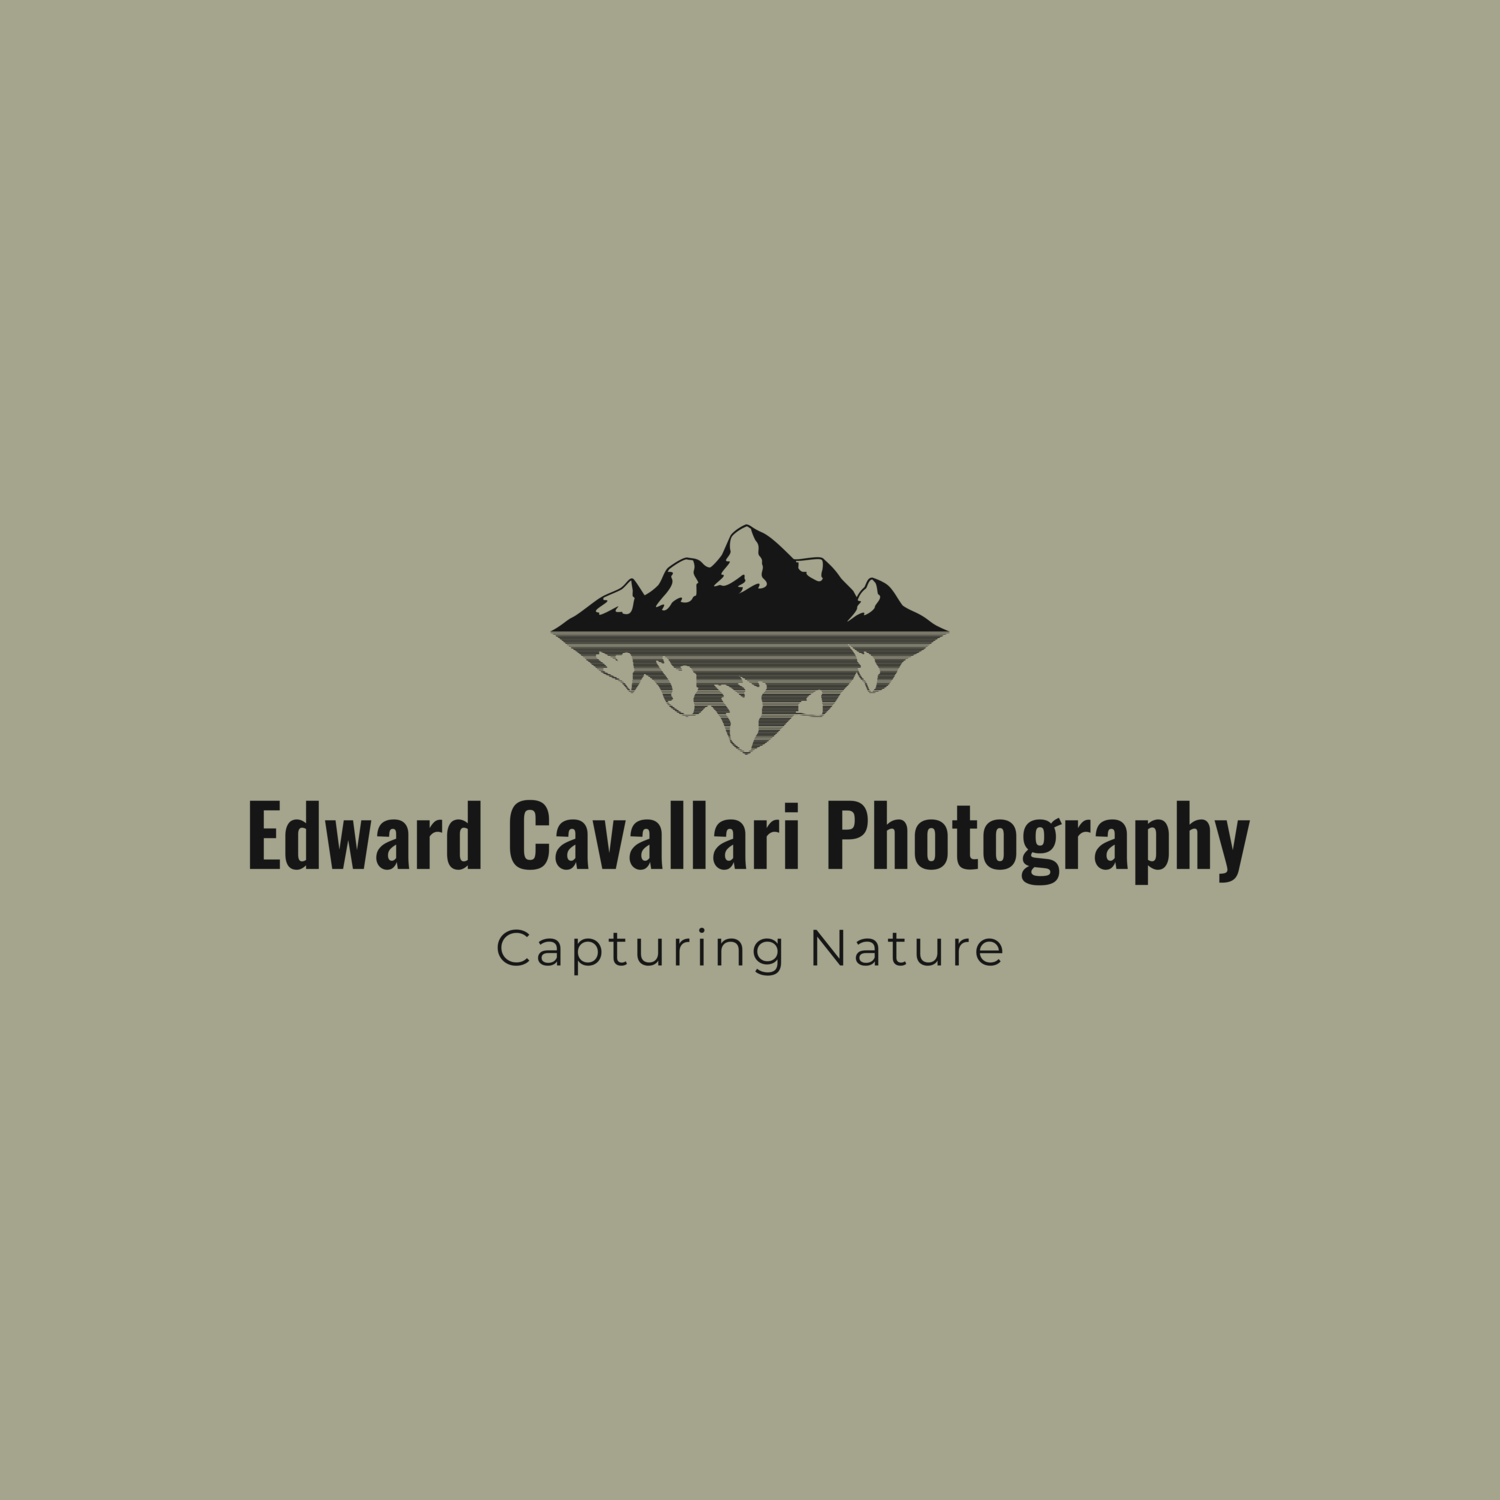 Edward Cavallari Photography -  Capturing Nature